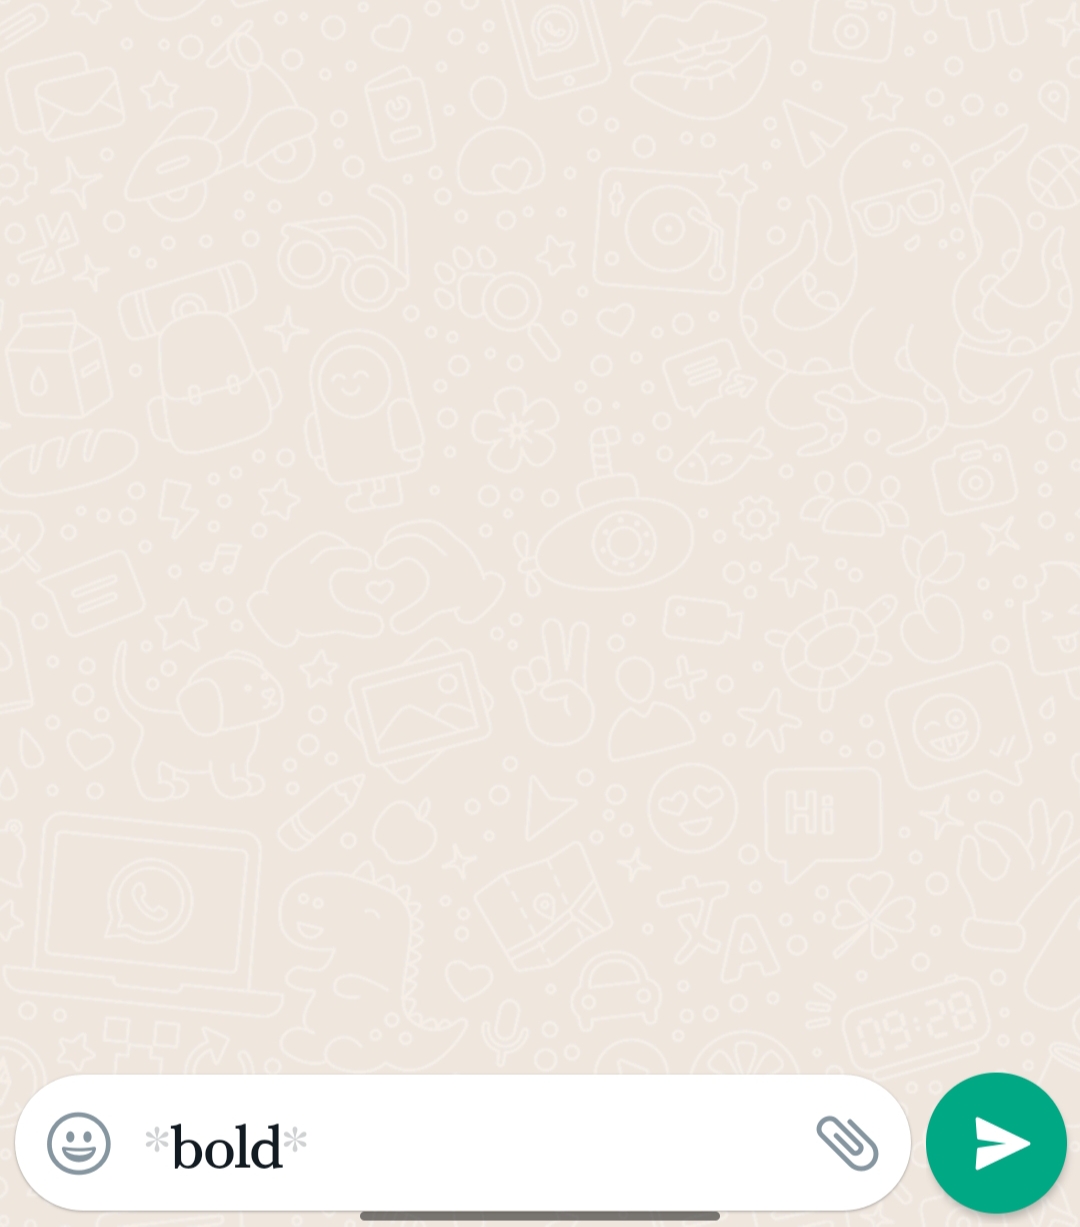 WhatsApp text bold